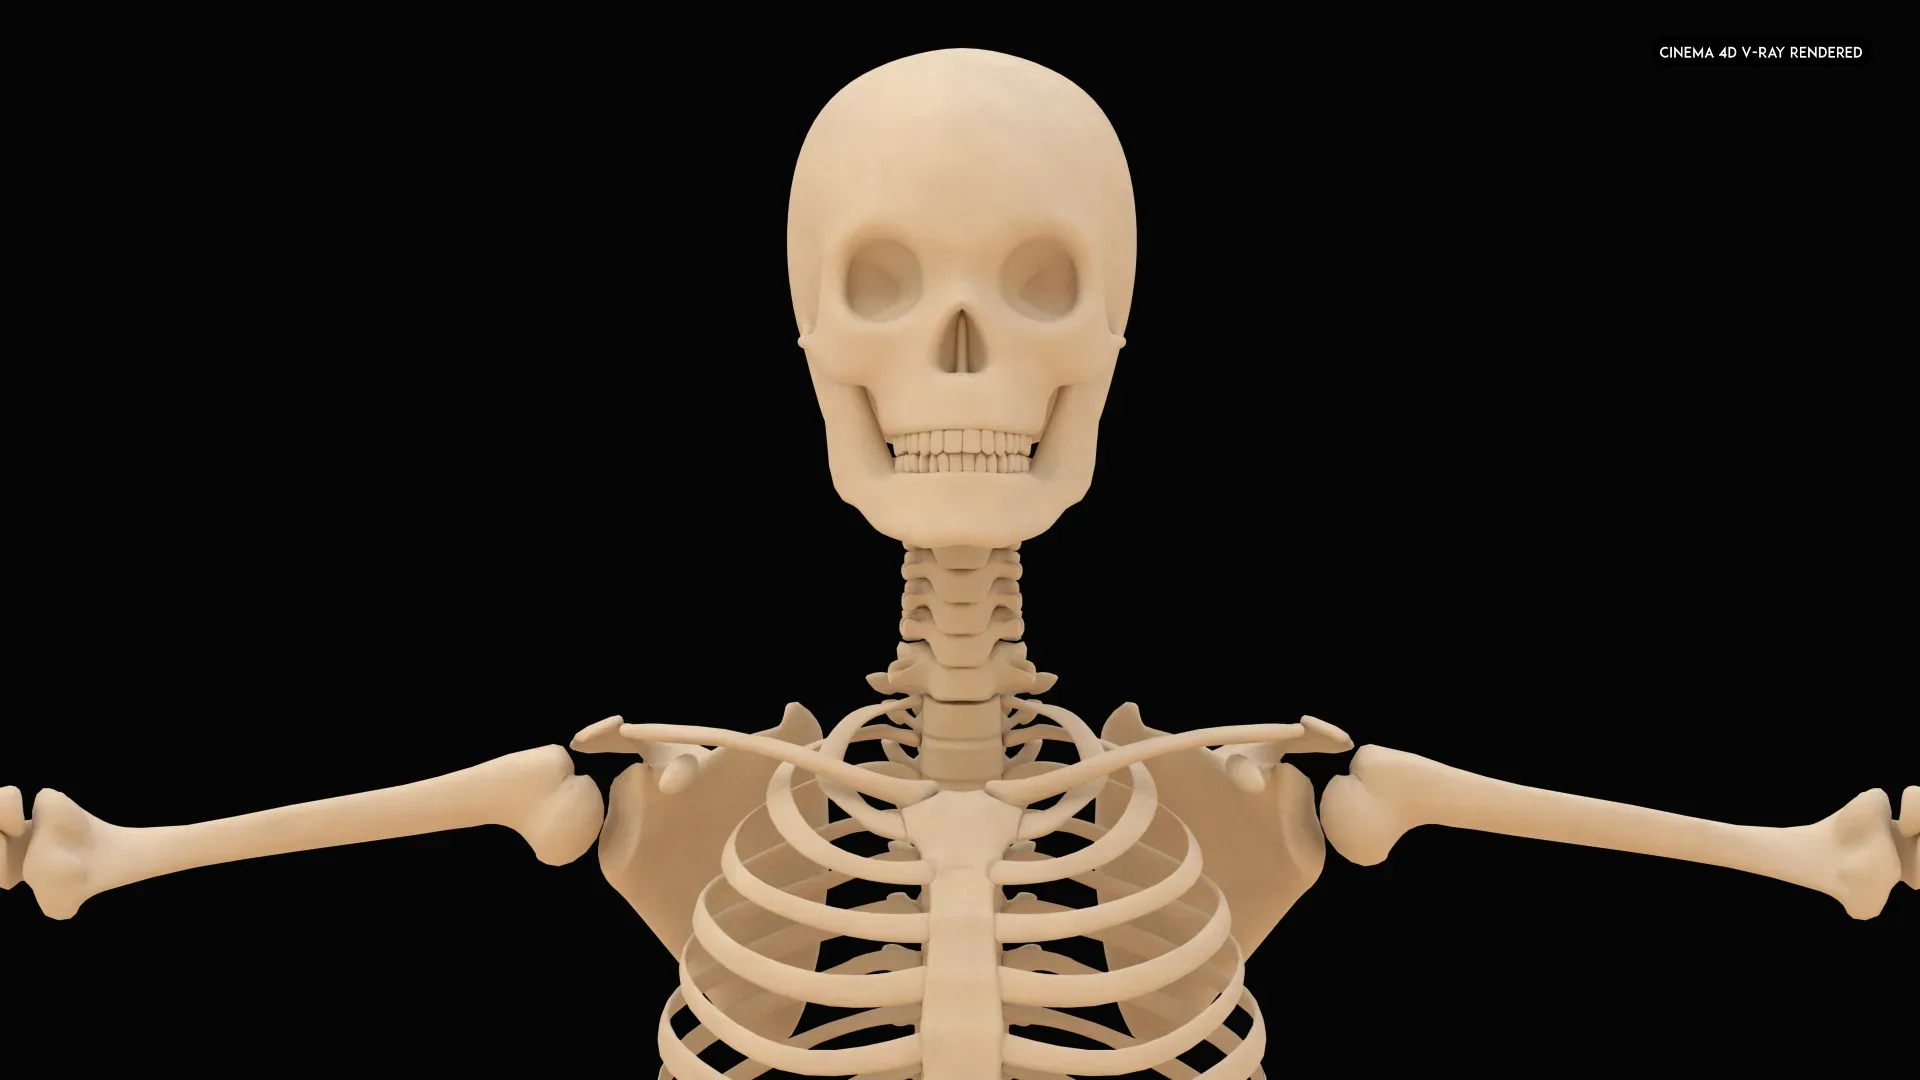 Realistic Human Skeleton